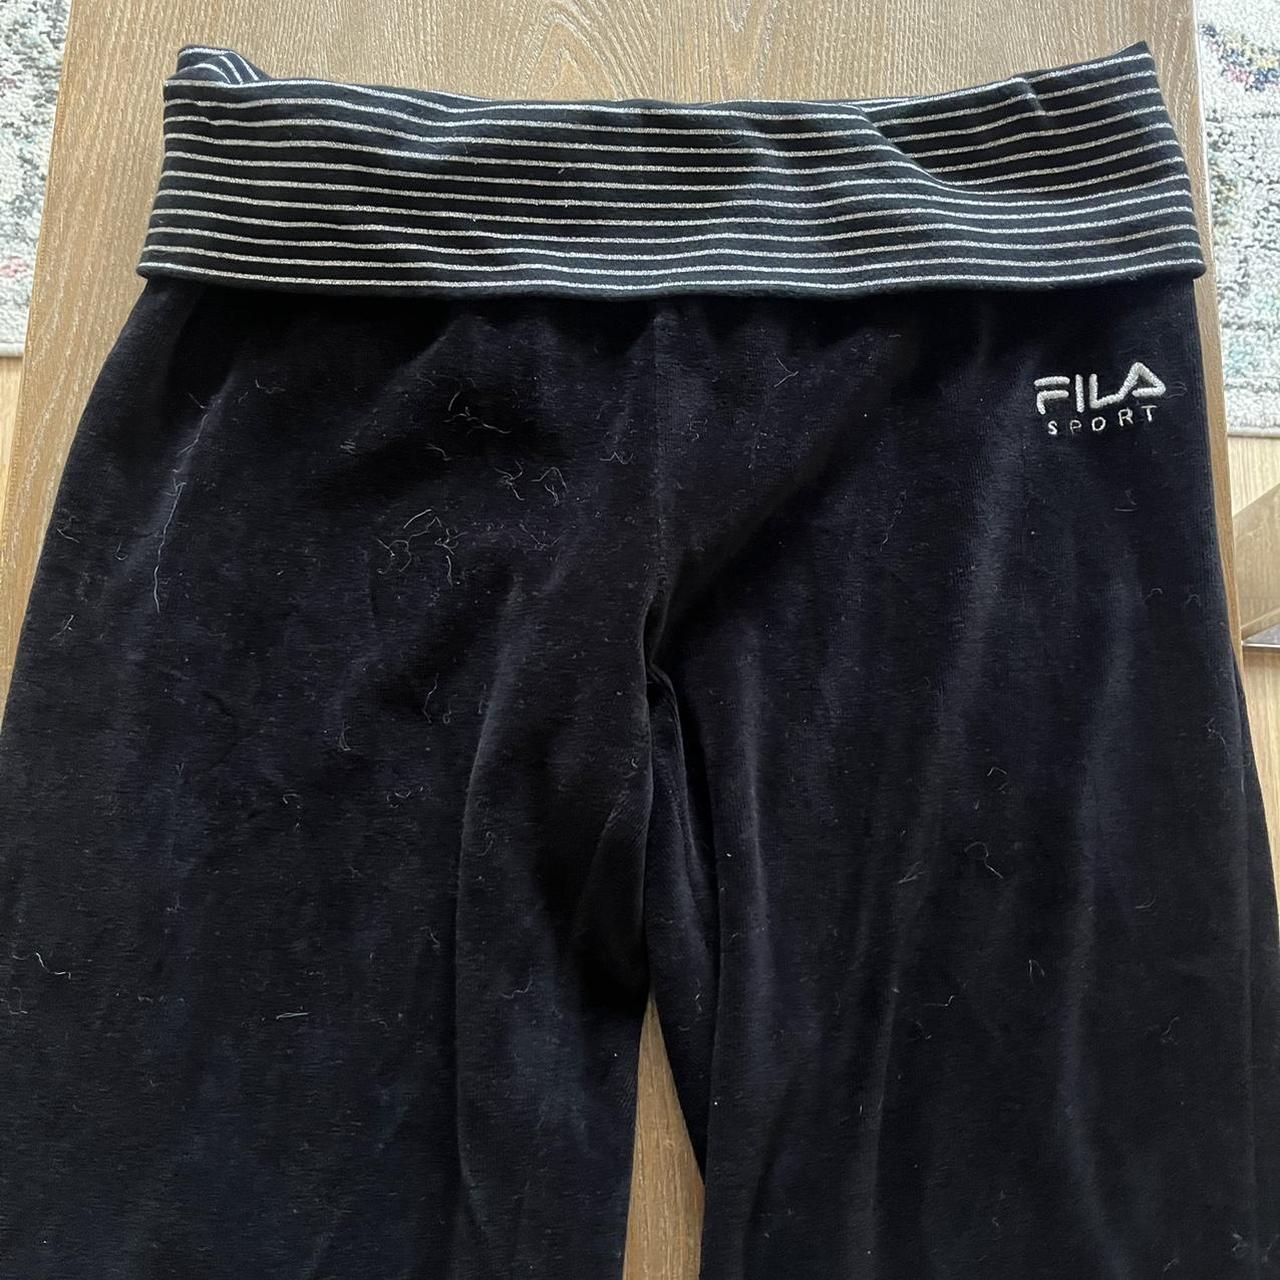 Straight leg Fila Sport yoga pants. Barely worn and - Depop